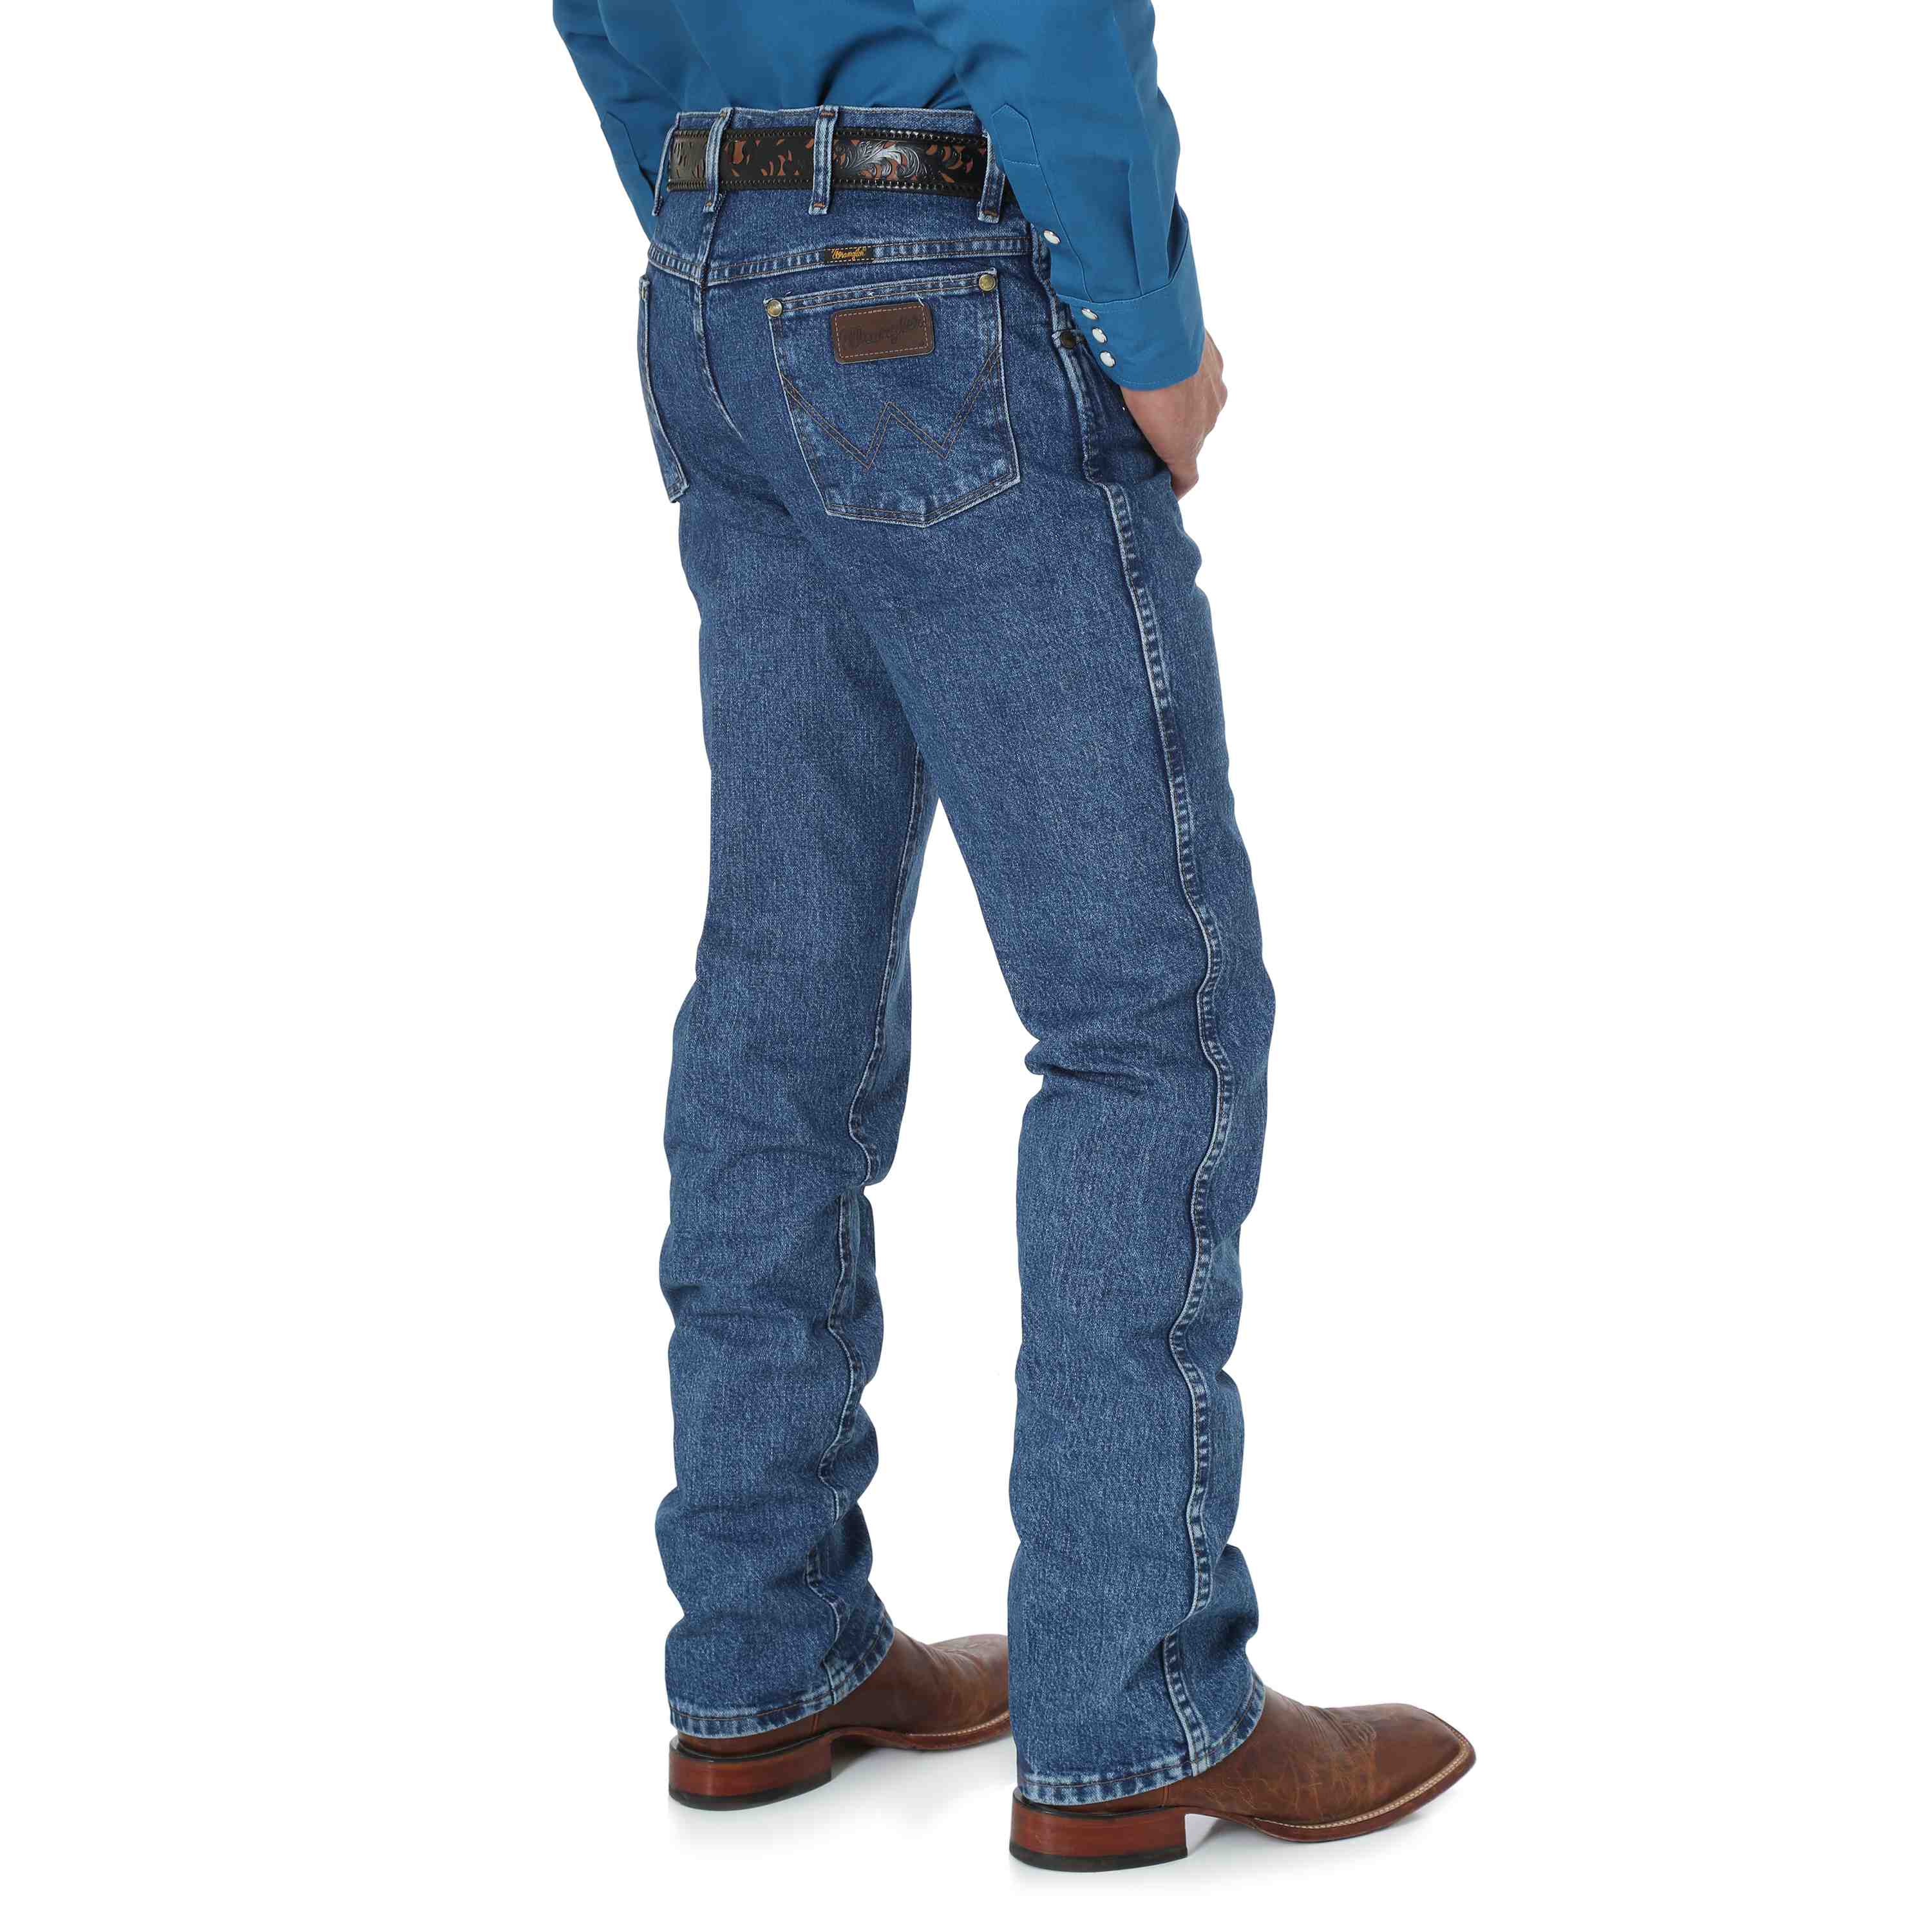 Wrangler Men's Premium Performance Stone Cowboy Cut Slim Fit Jean - Russell's Western Wear, Inc.